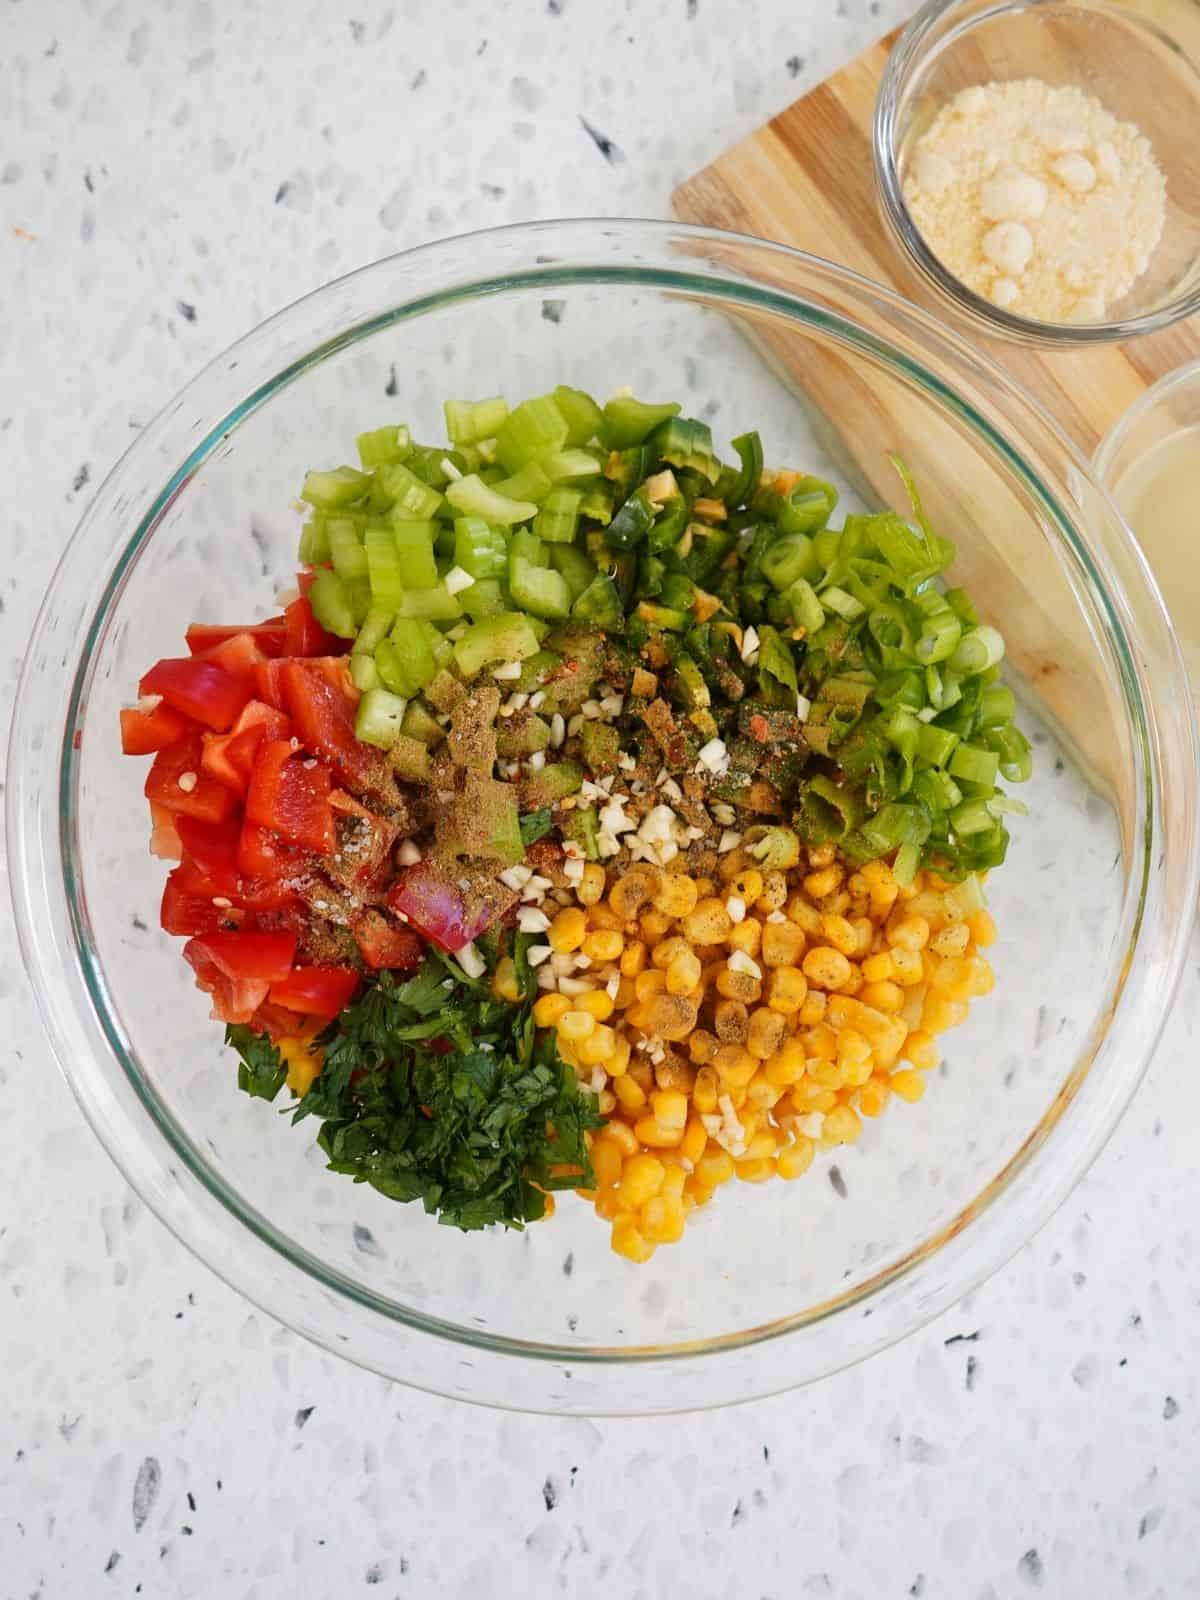 Ingredients for corn fiesta salad in bowl.